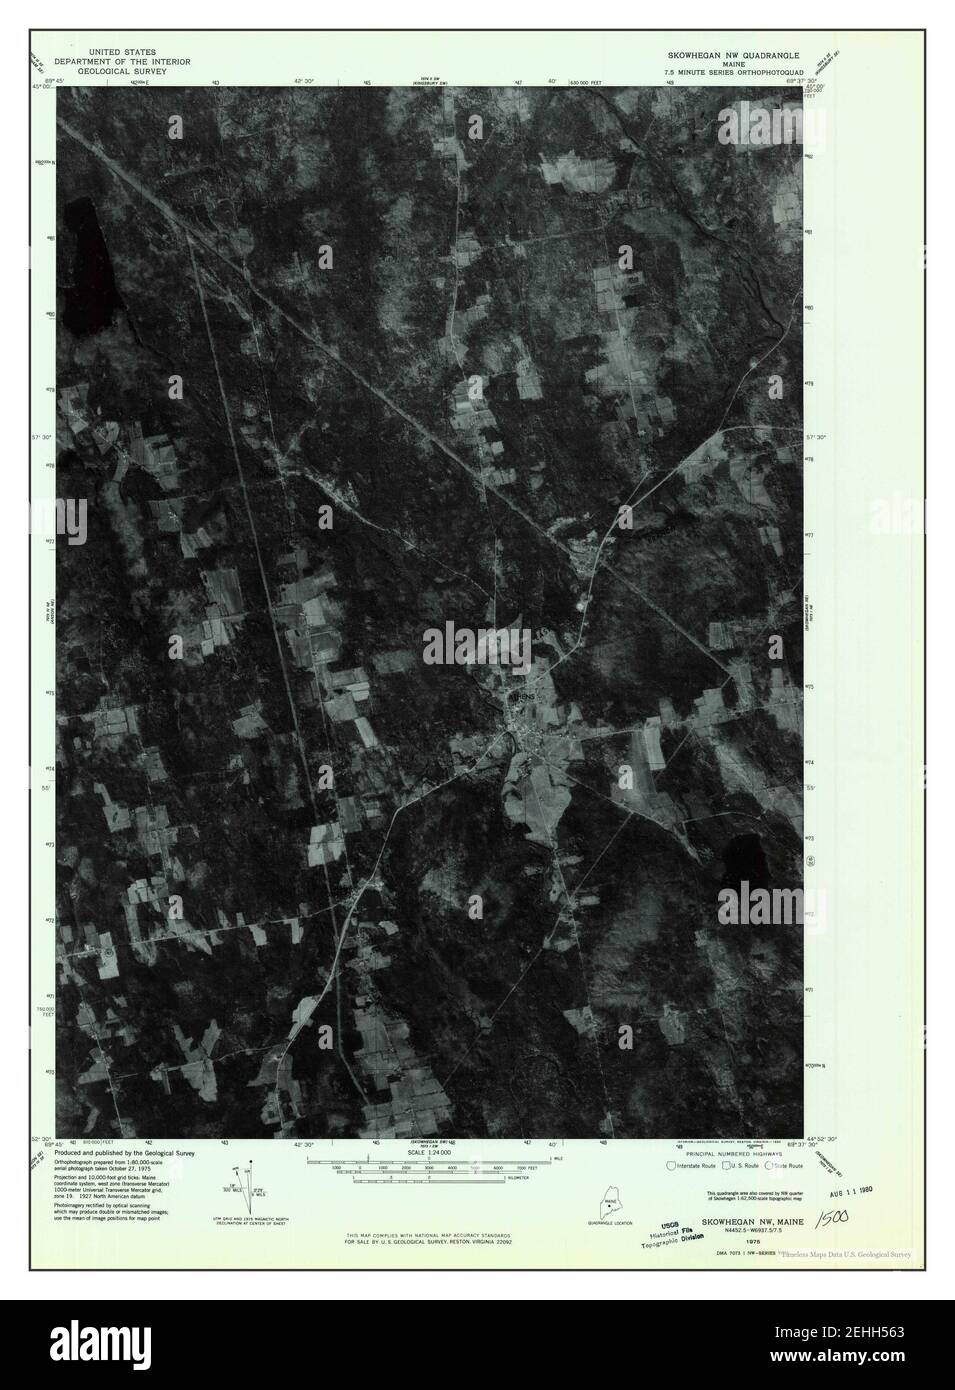 Skowhegan NW, Maine, map 1975, 1:24000, United States of America by Timeless Maps, data U.S. Geological Survey Stock Photo